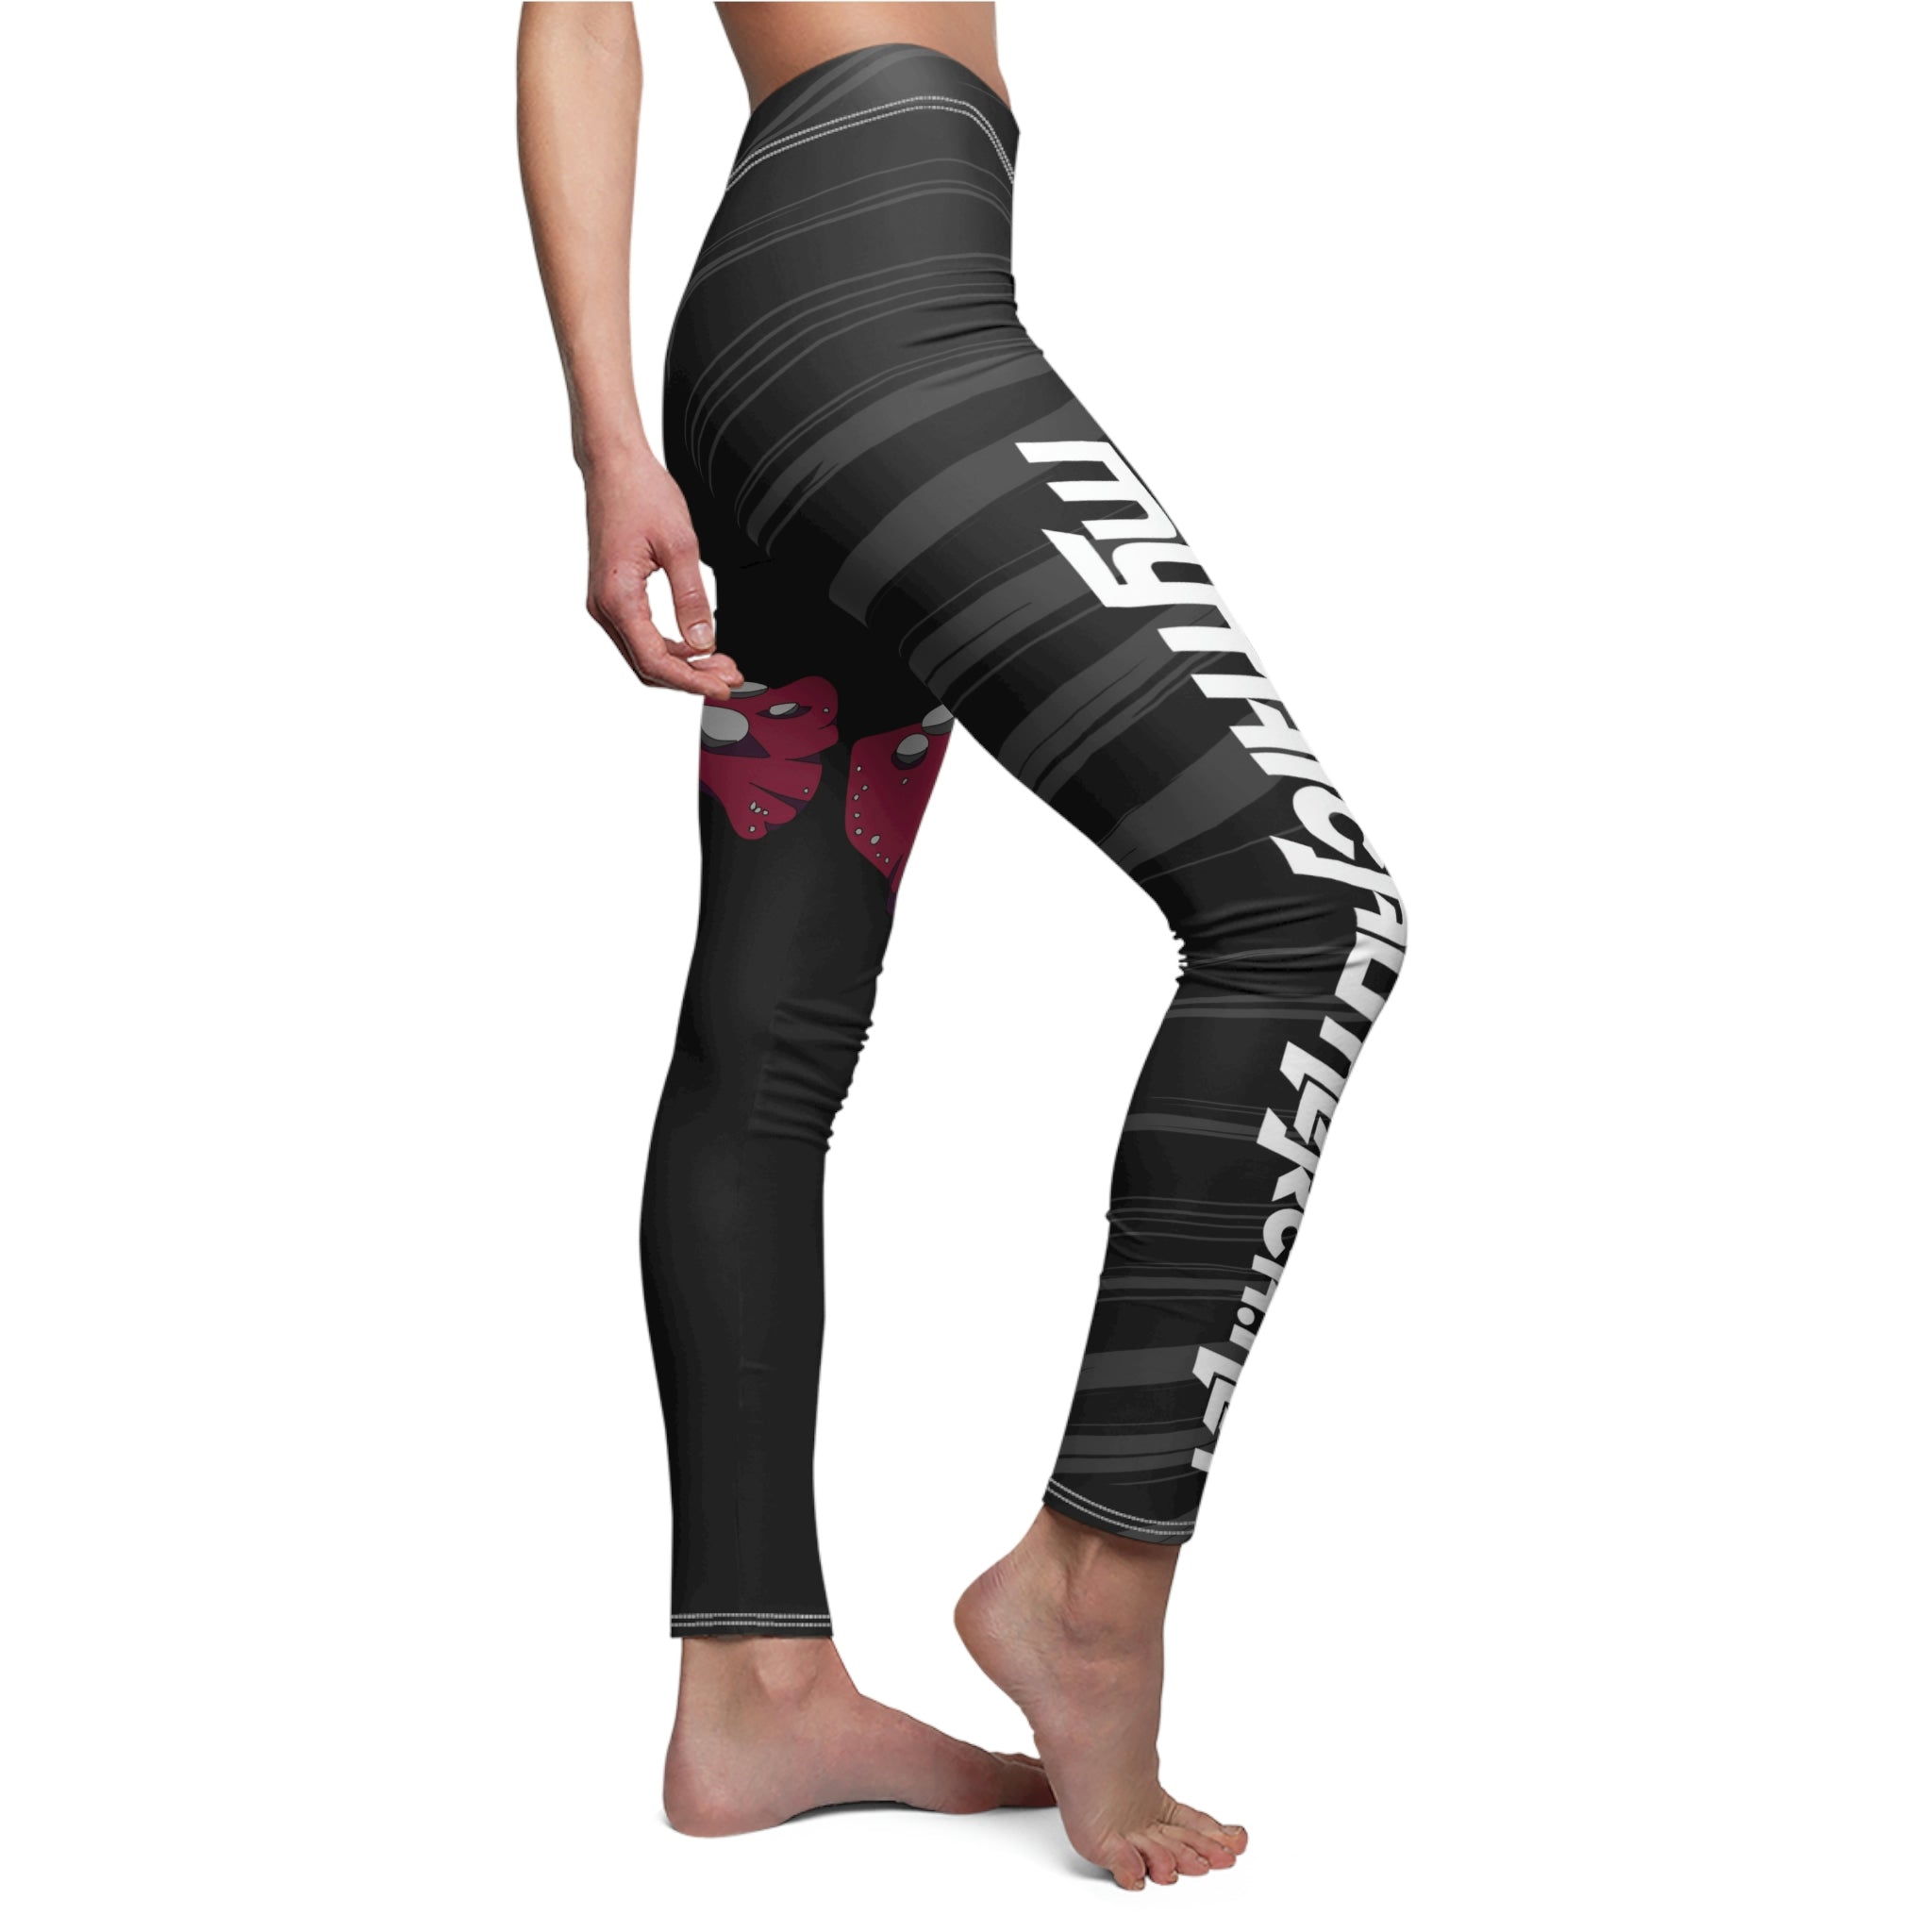 Toshi Timo - Socks pack (stockings, tights, leggings). Marvelous / Clo 3D /  zprj obj fbx